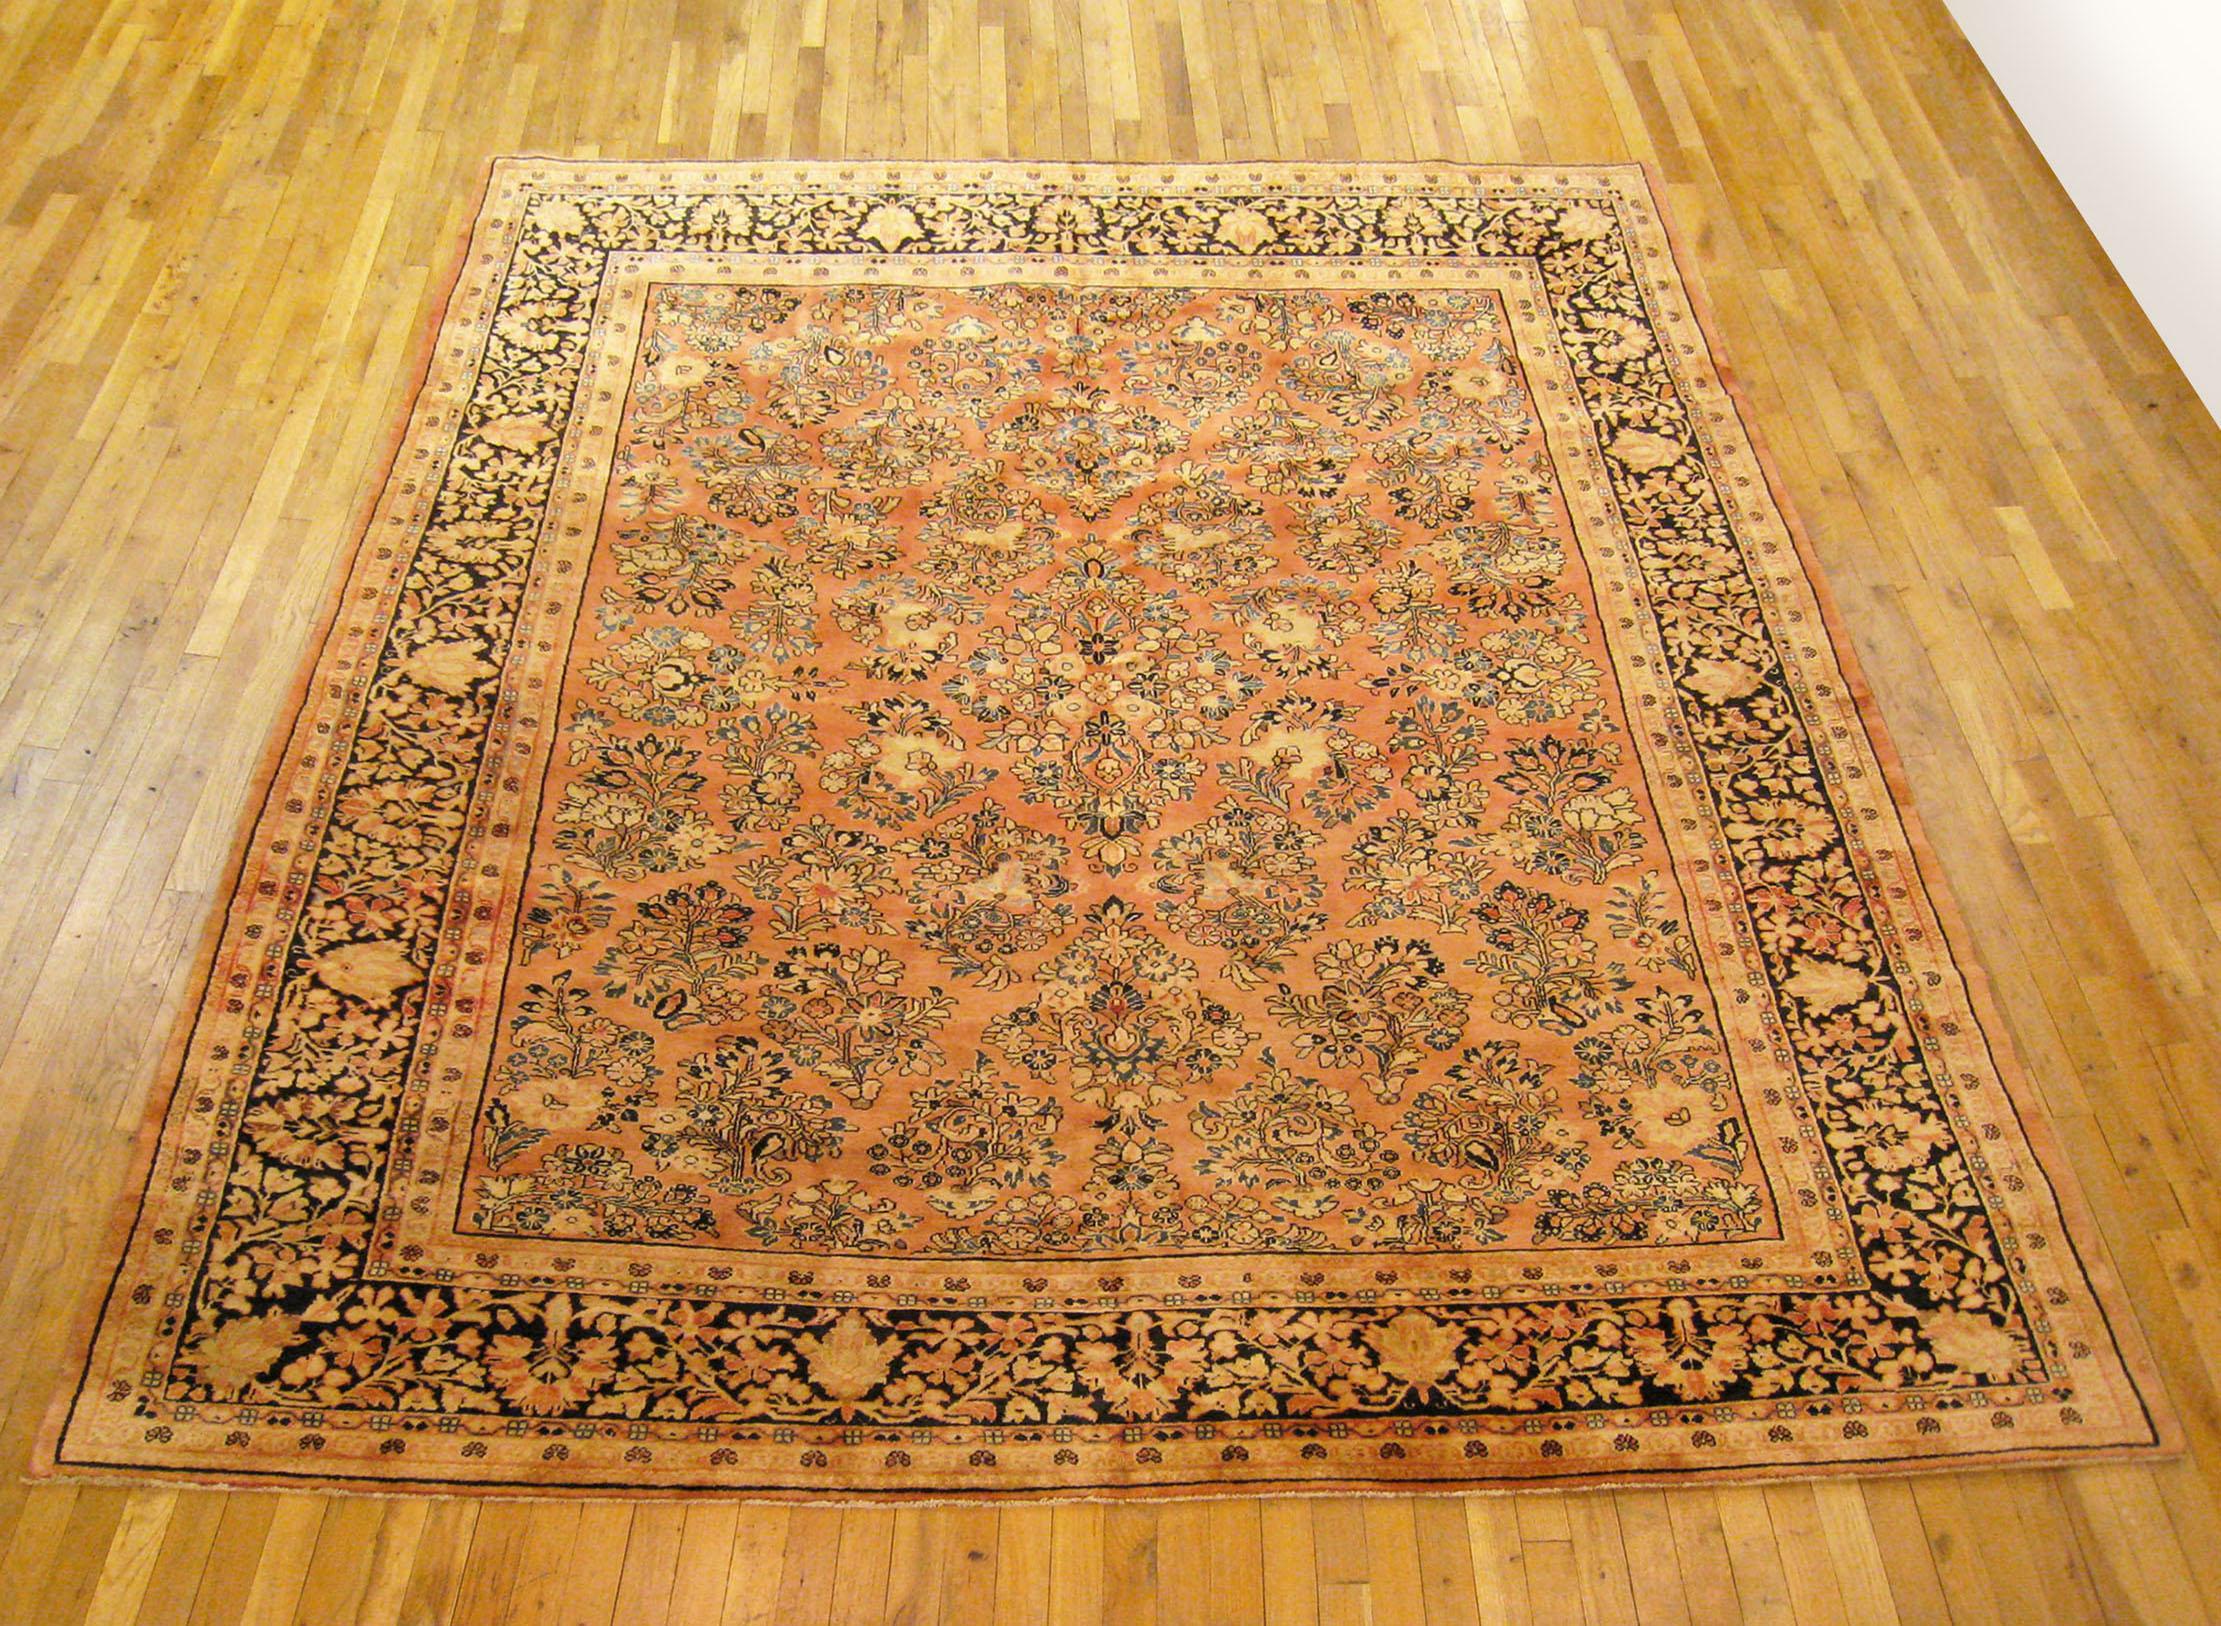 Vintage Persian Sarouk Oriental rug, circa 1930, Room size

A vintage Persian Sarouk oriental rug, size 10'1